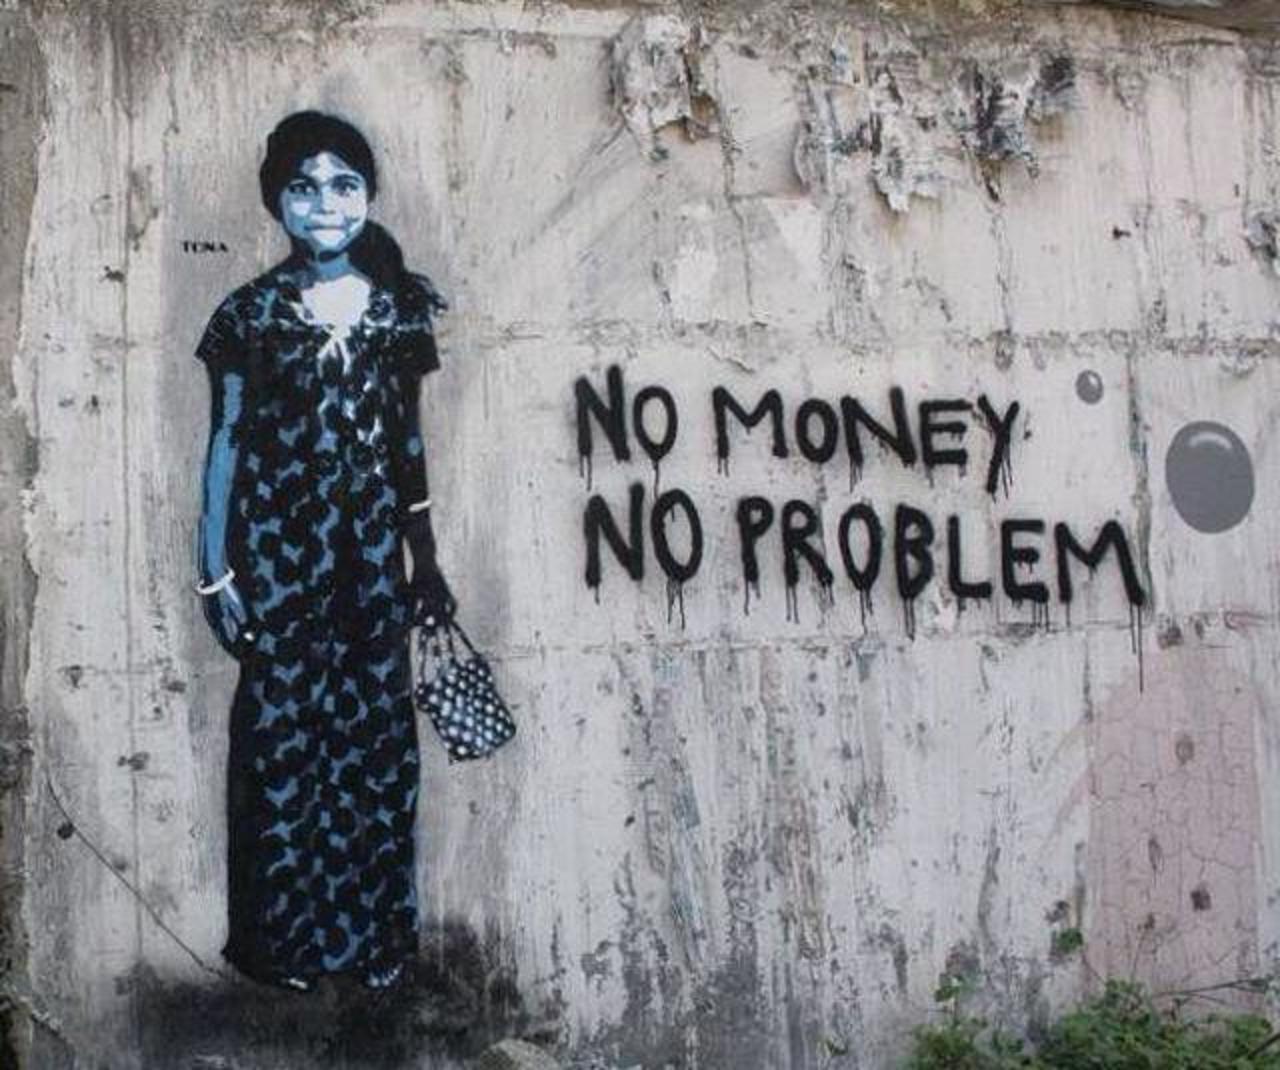 RT @GoogleStreetArt: No Money No Problem
Street Art by TONA in Pokara, Nepal 

#art #arte #graffiti #streetart http://t.co/GkCTFDmYIt